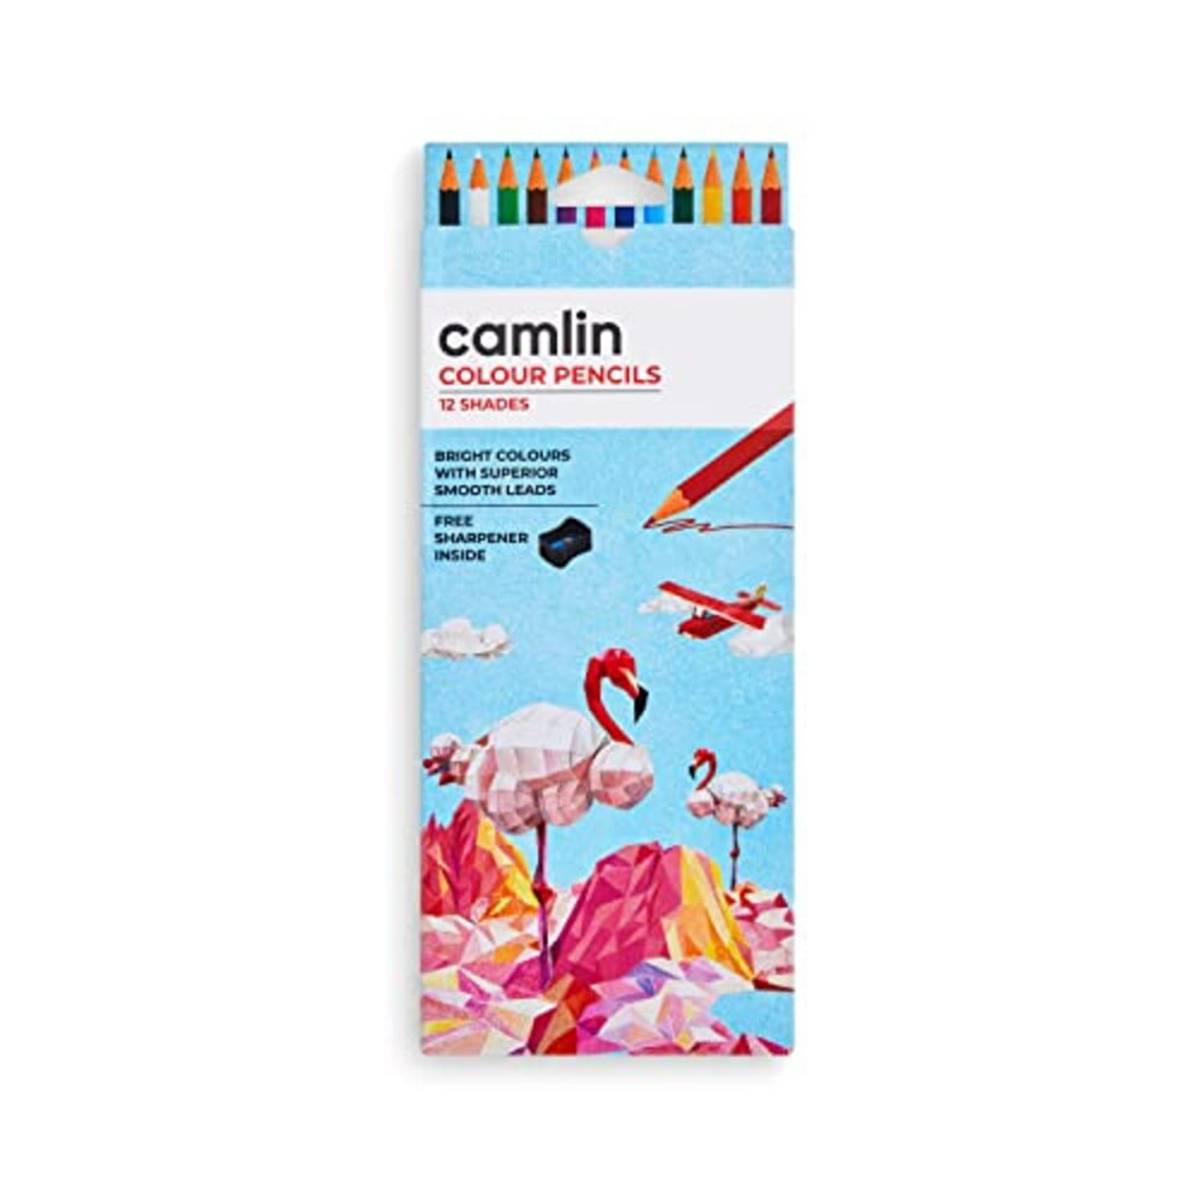 Camlin Colour Pencils 12 Shades 